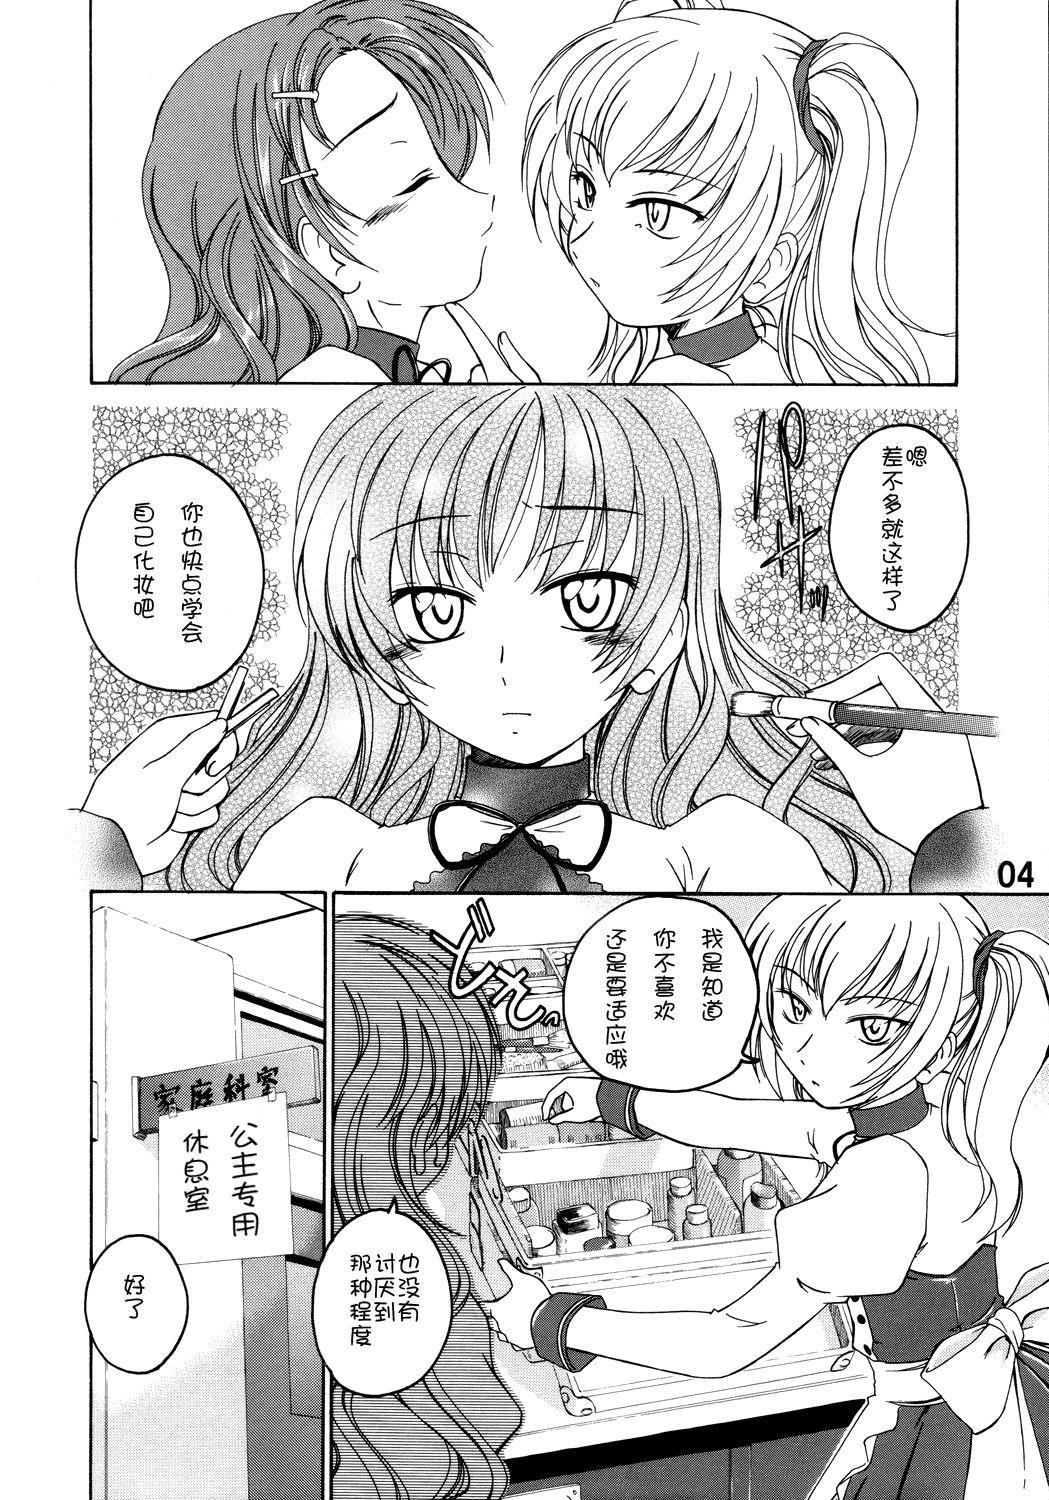 Love Manga Sangyou Haikibutsu 11 - Comic Industrial Wastes 11 - Princess princess Teenager - Page 3